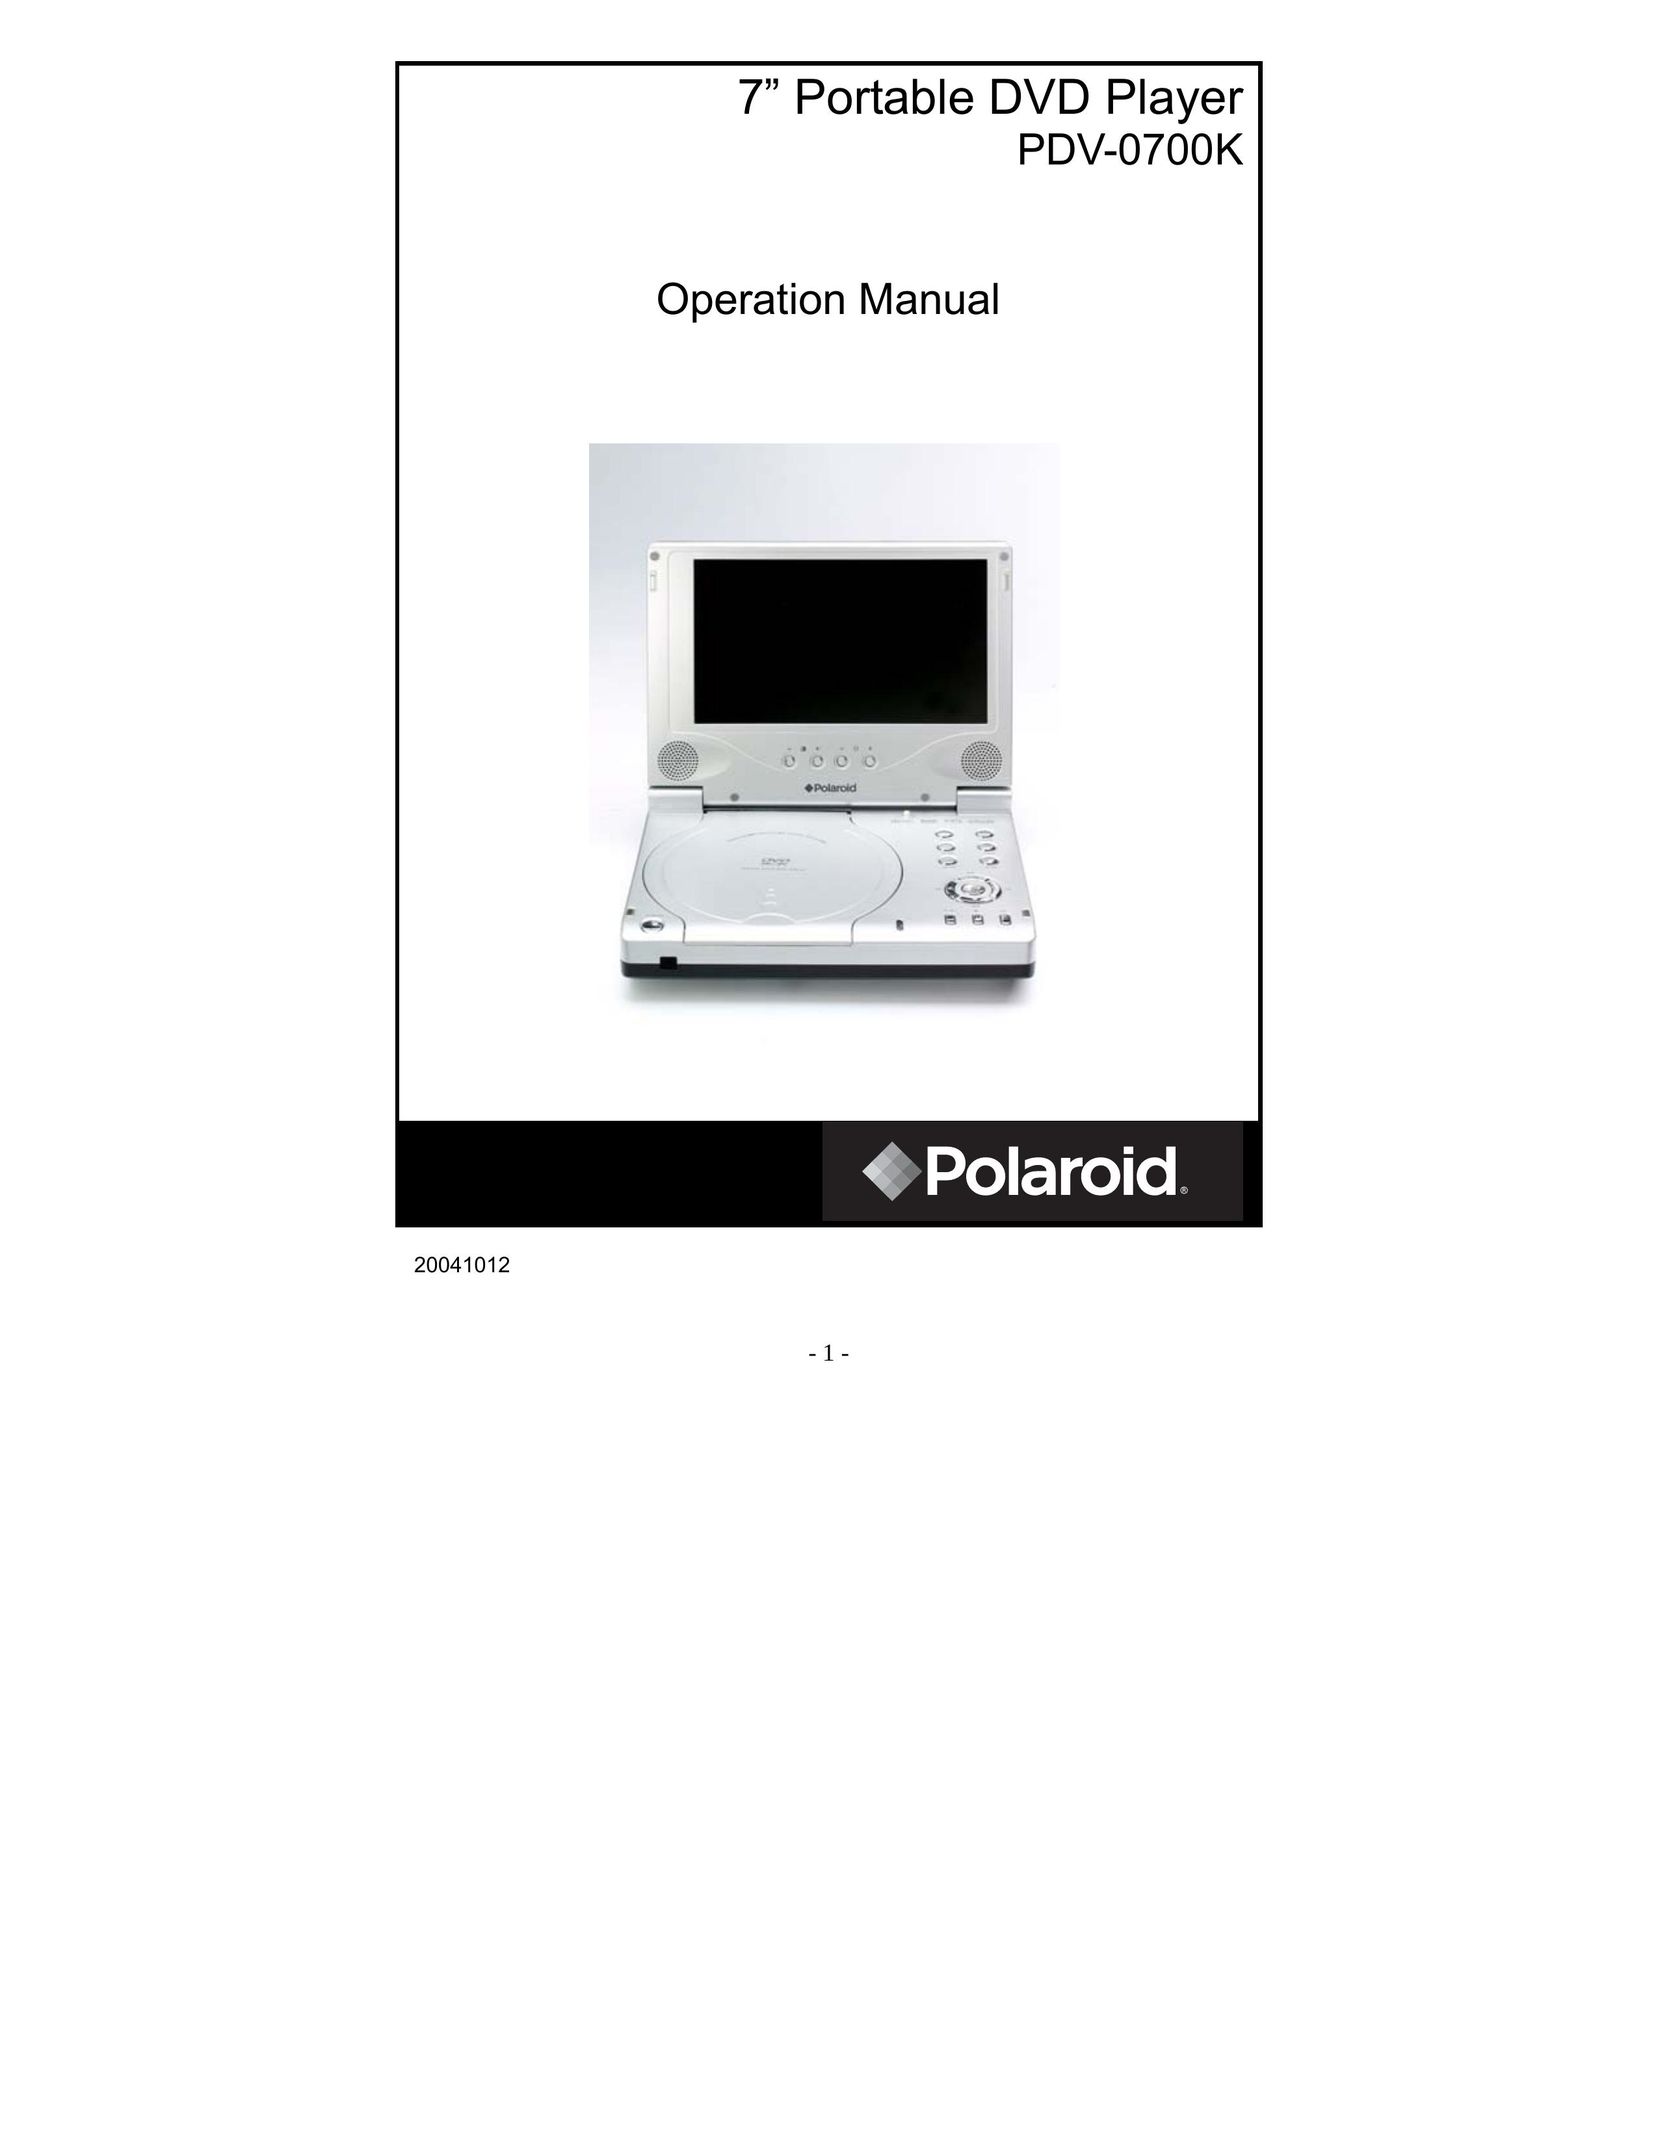 Polaroid PDV-0700K DVD Player User Manual